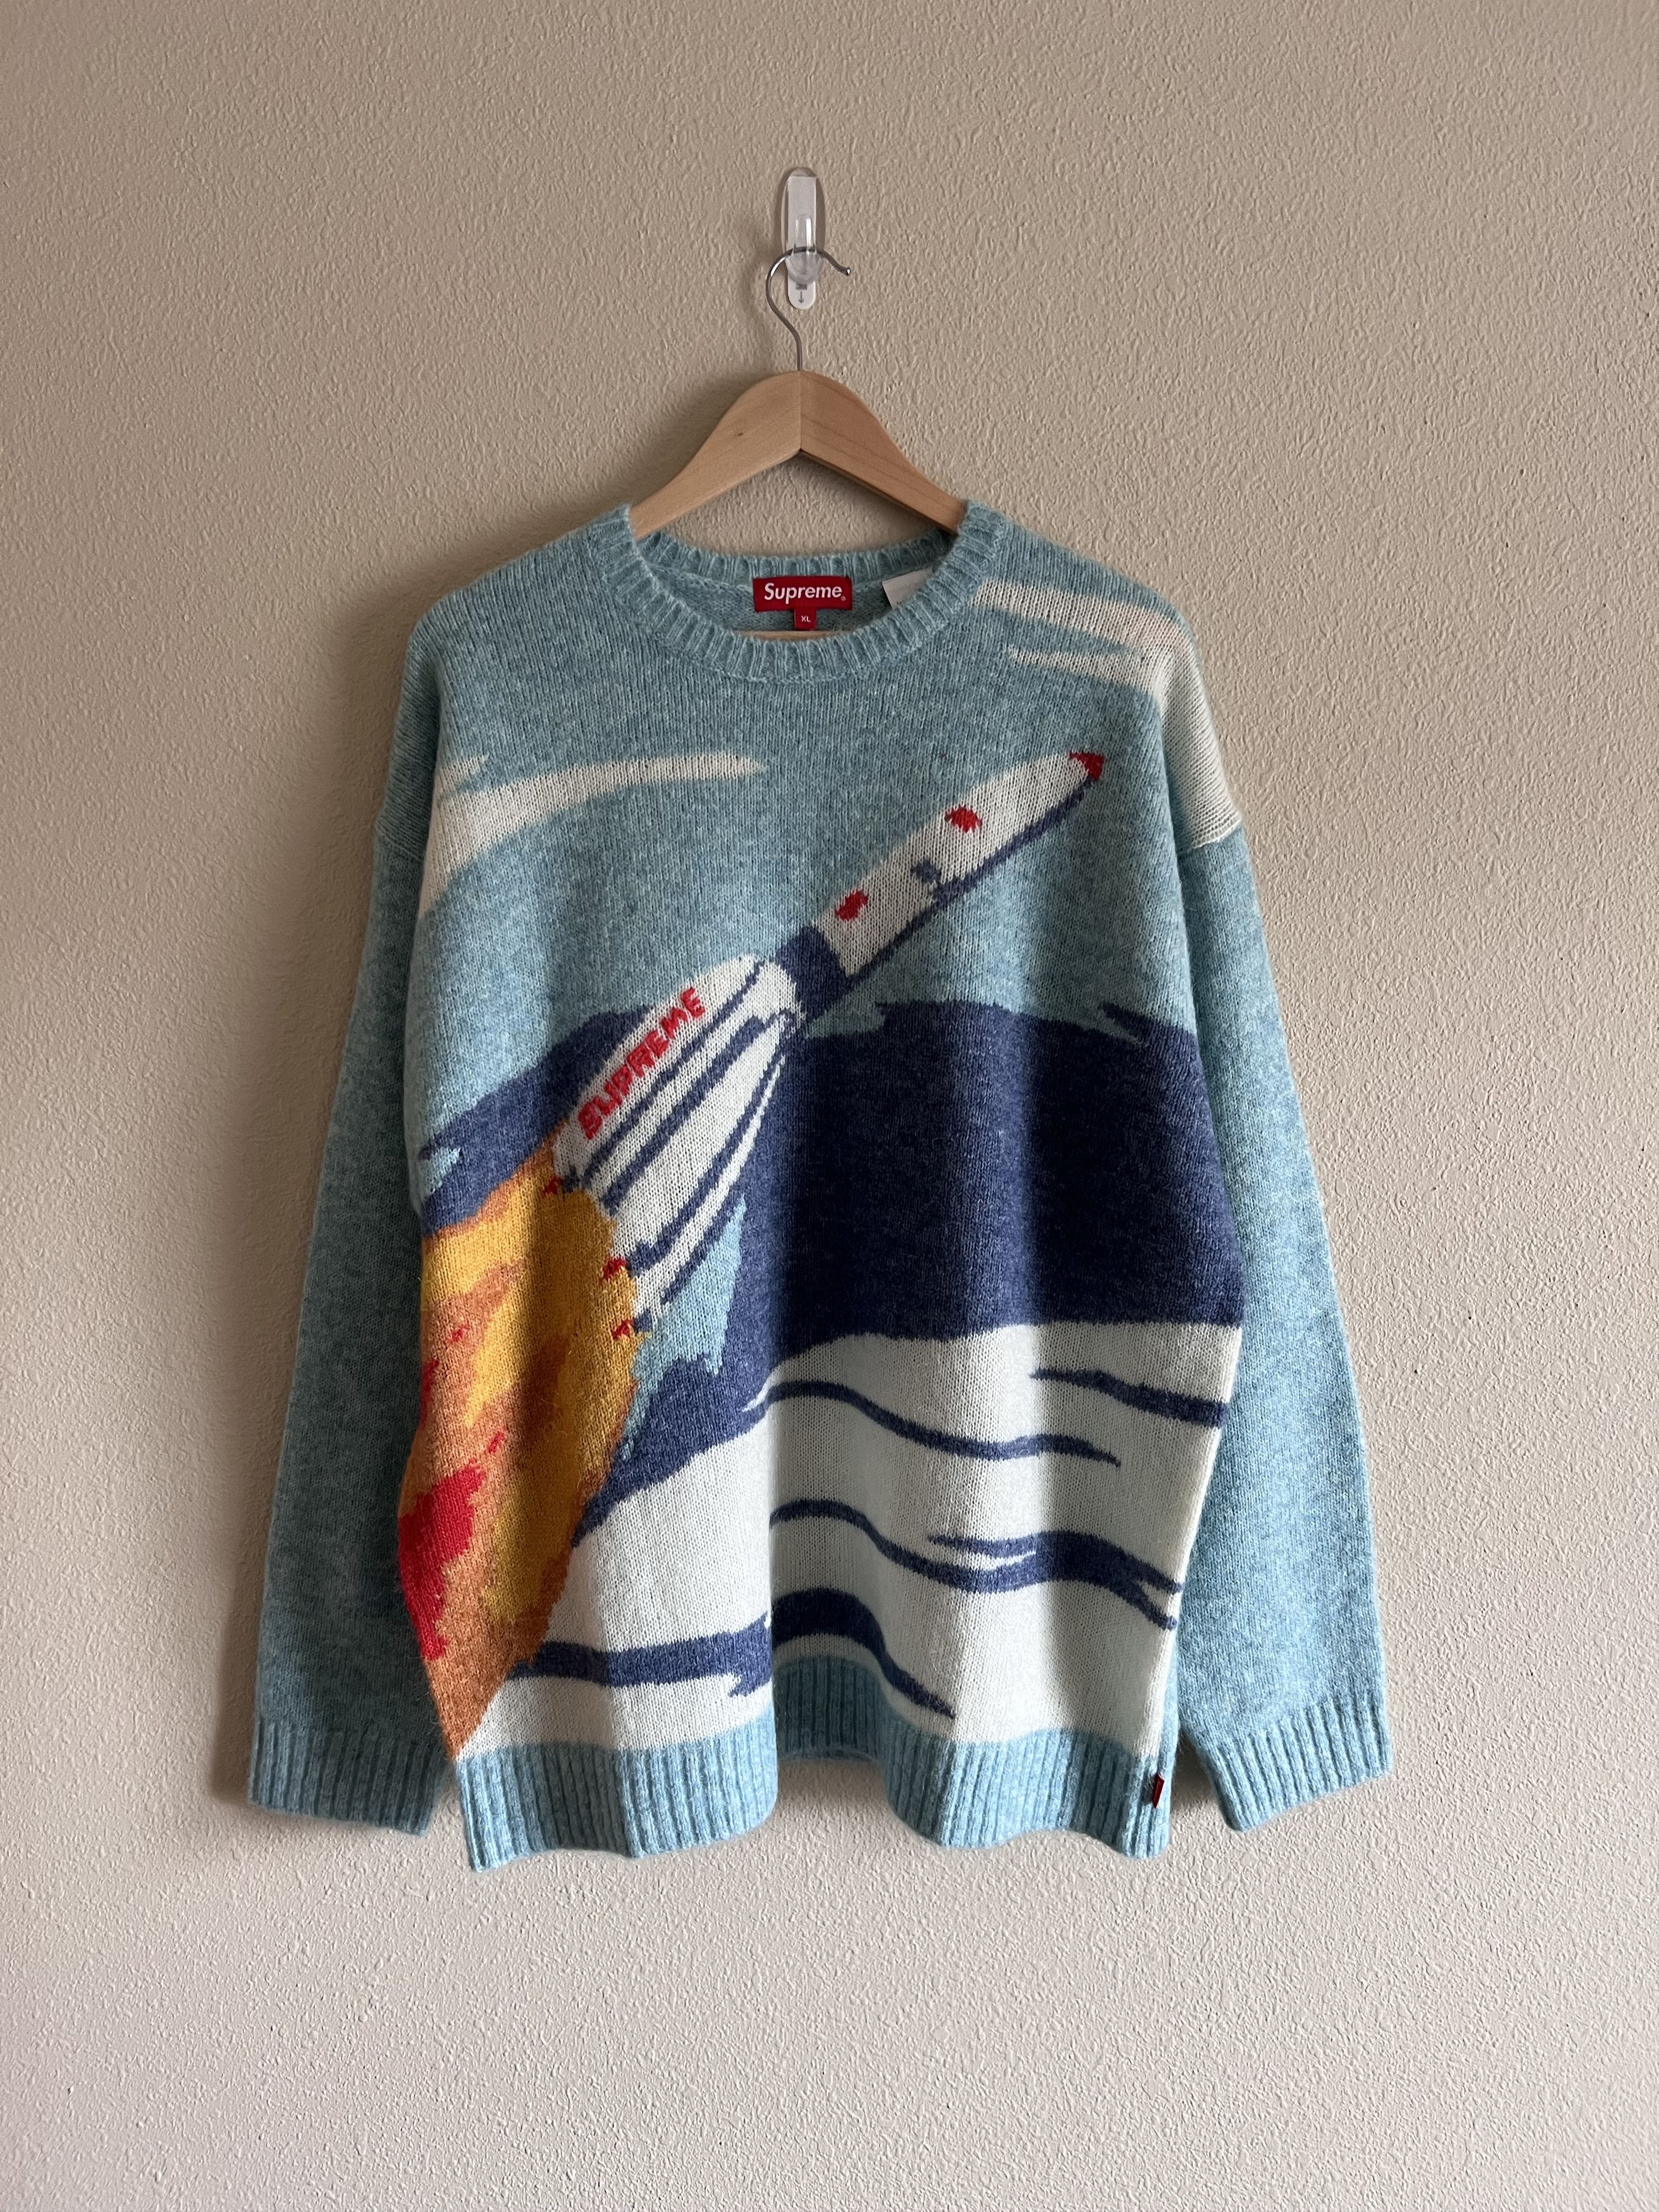 Supreme Supreme Rocket Sweater in Blue | Grailed